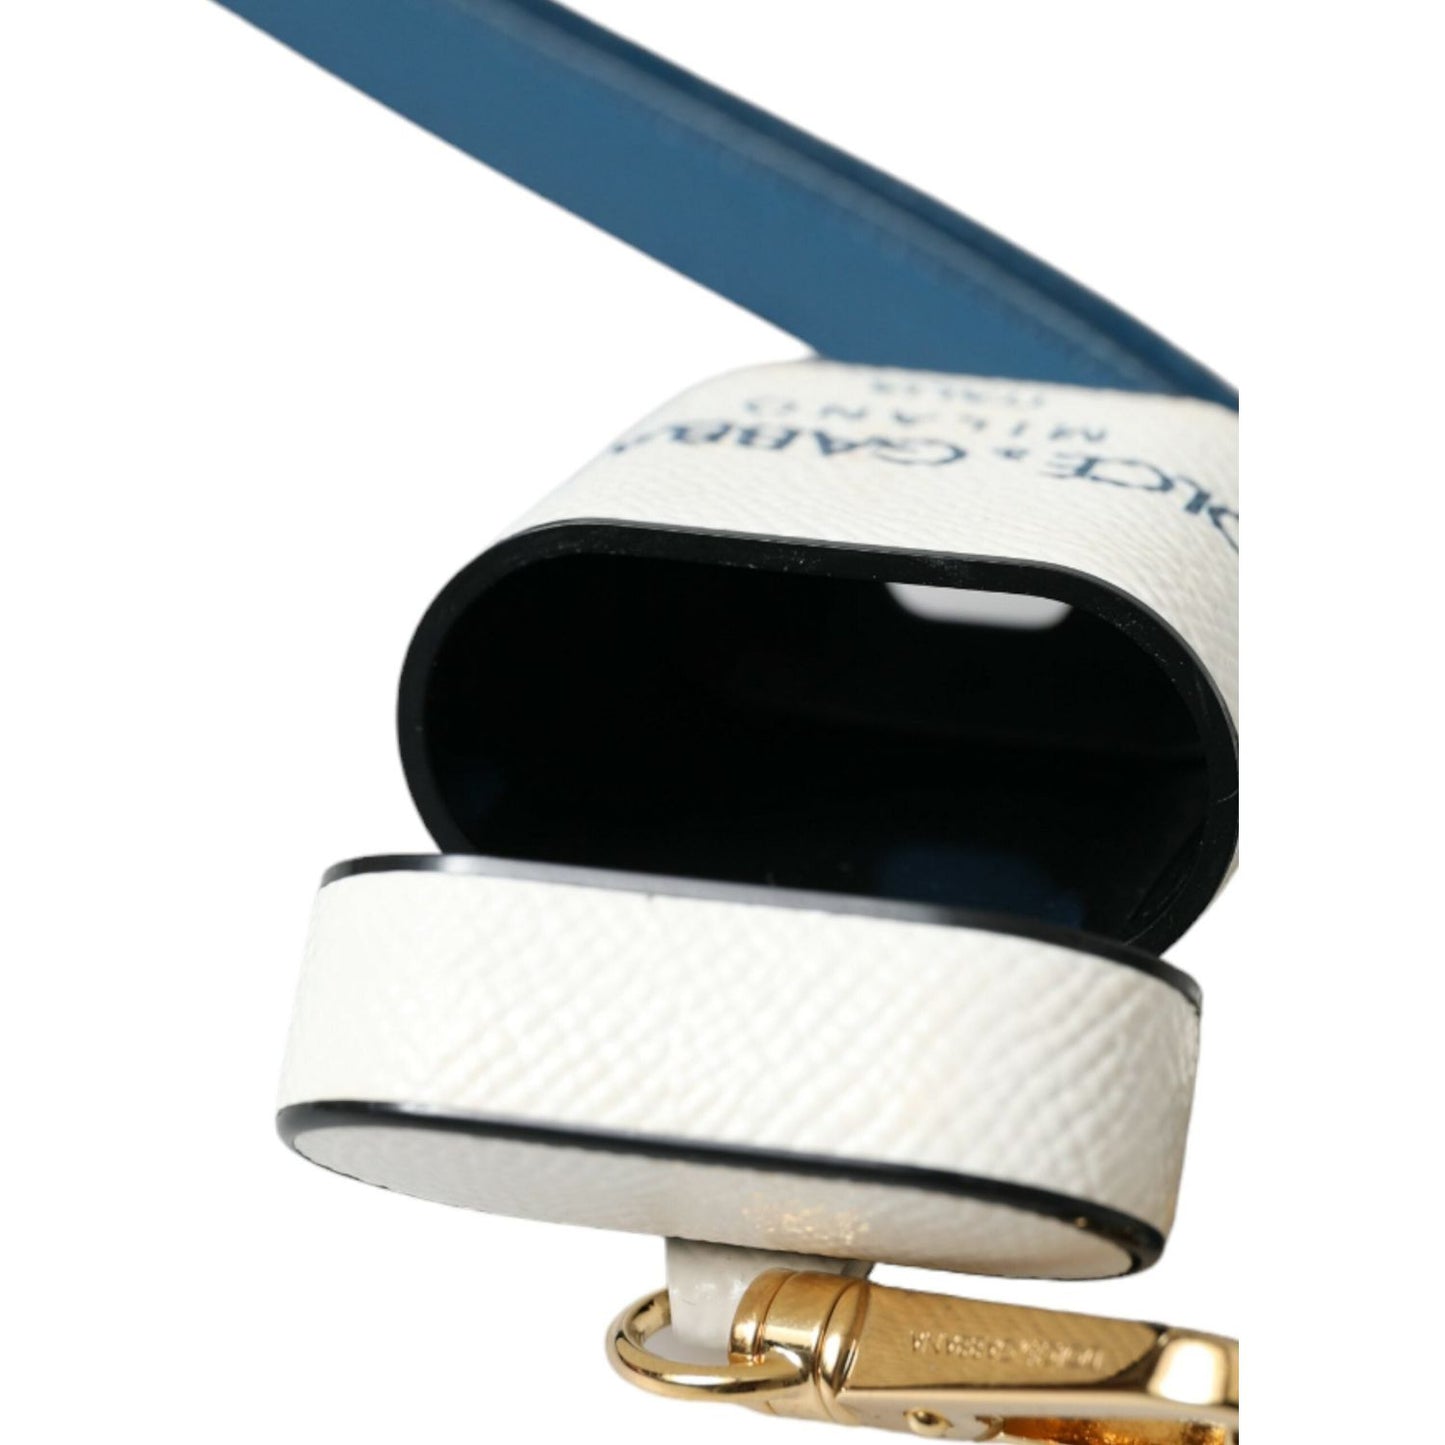 Dolce & Gabbana | Chic Leather Airpods Case in Blue & White| McRichard Designer Brands   